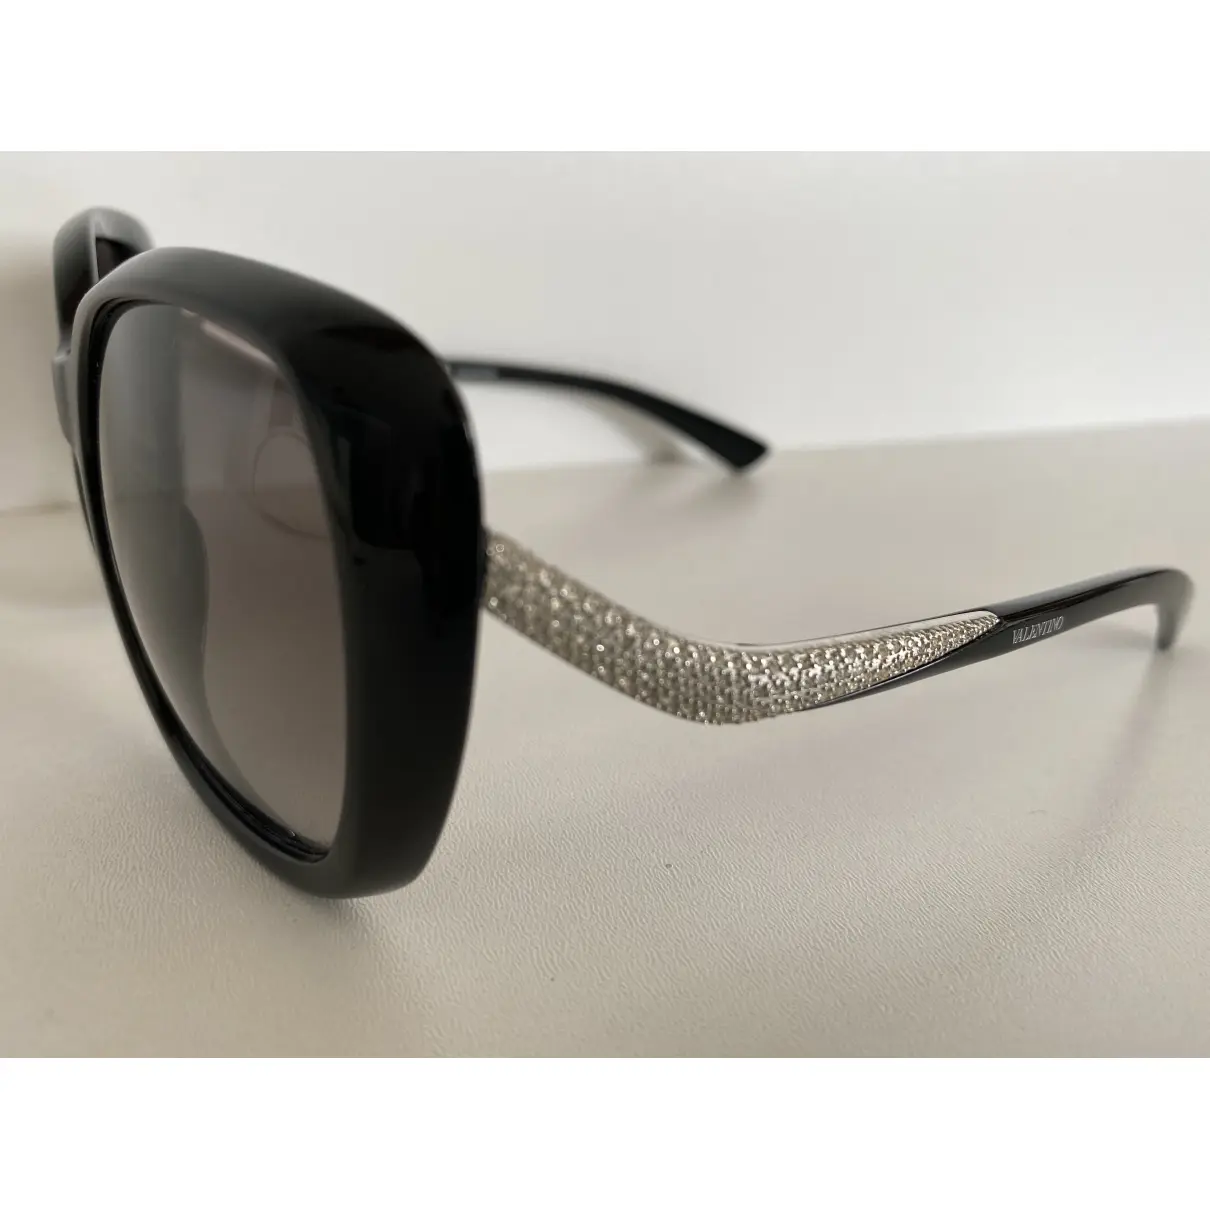 Buy Valentino Garavani Oversized sunglasses online